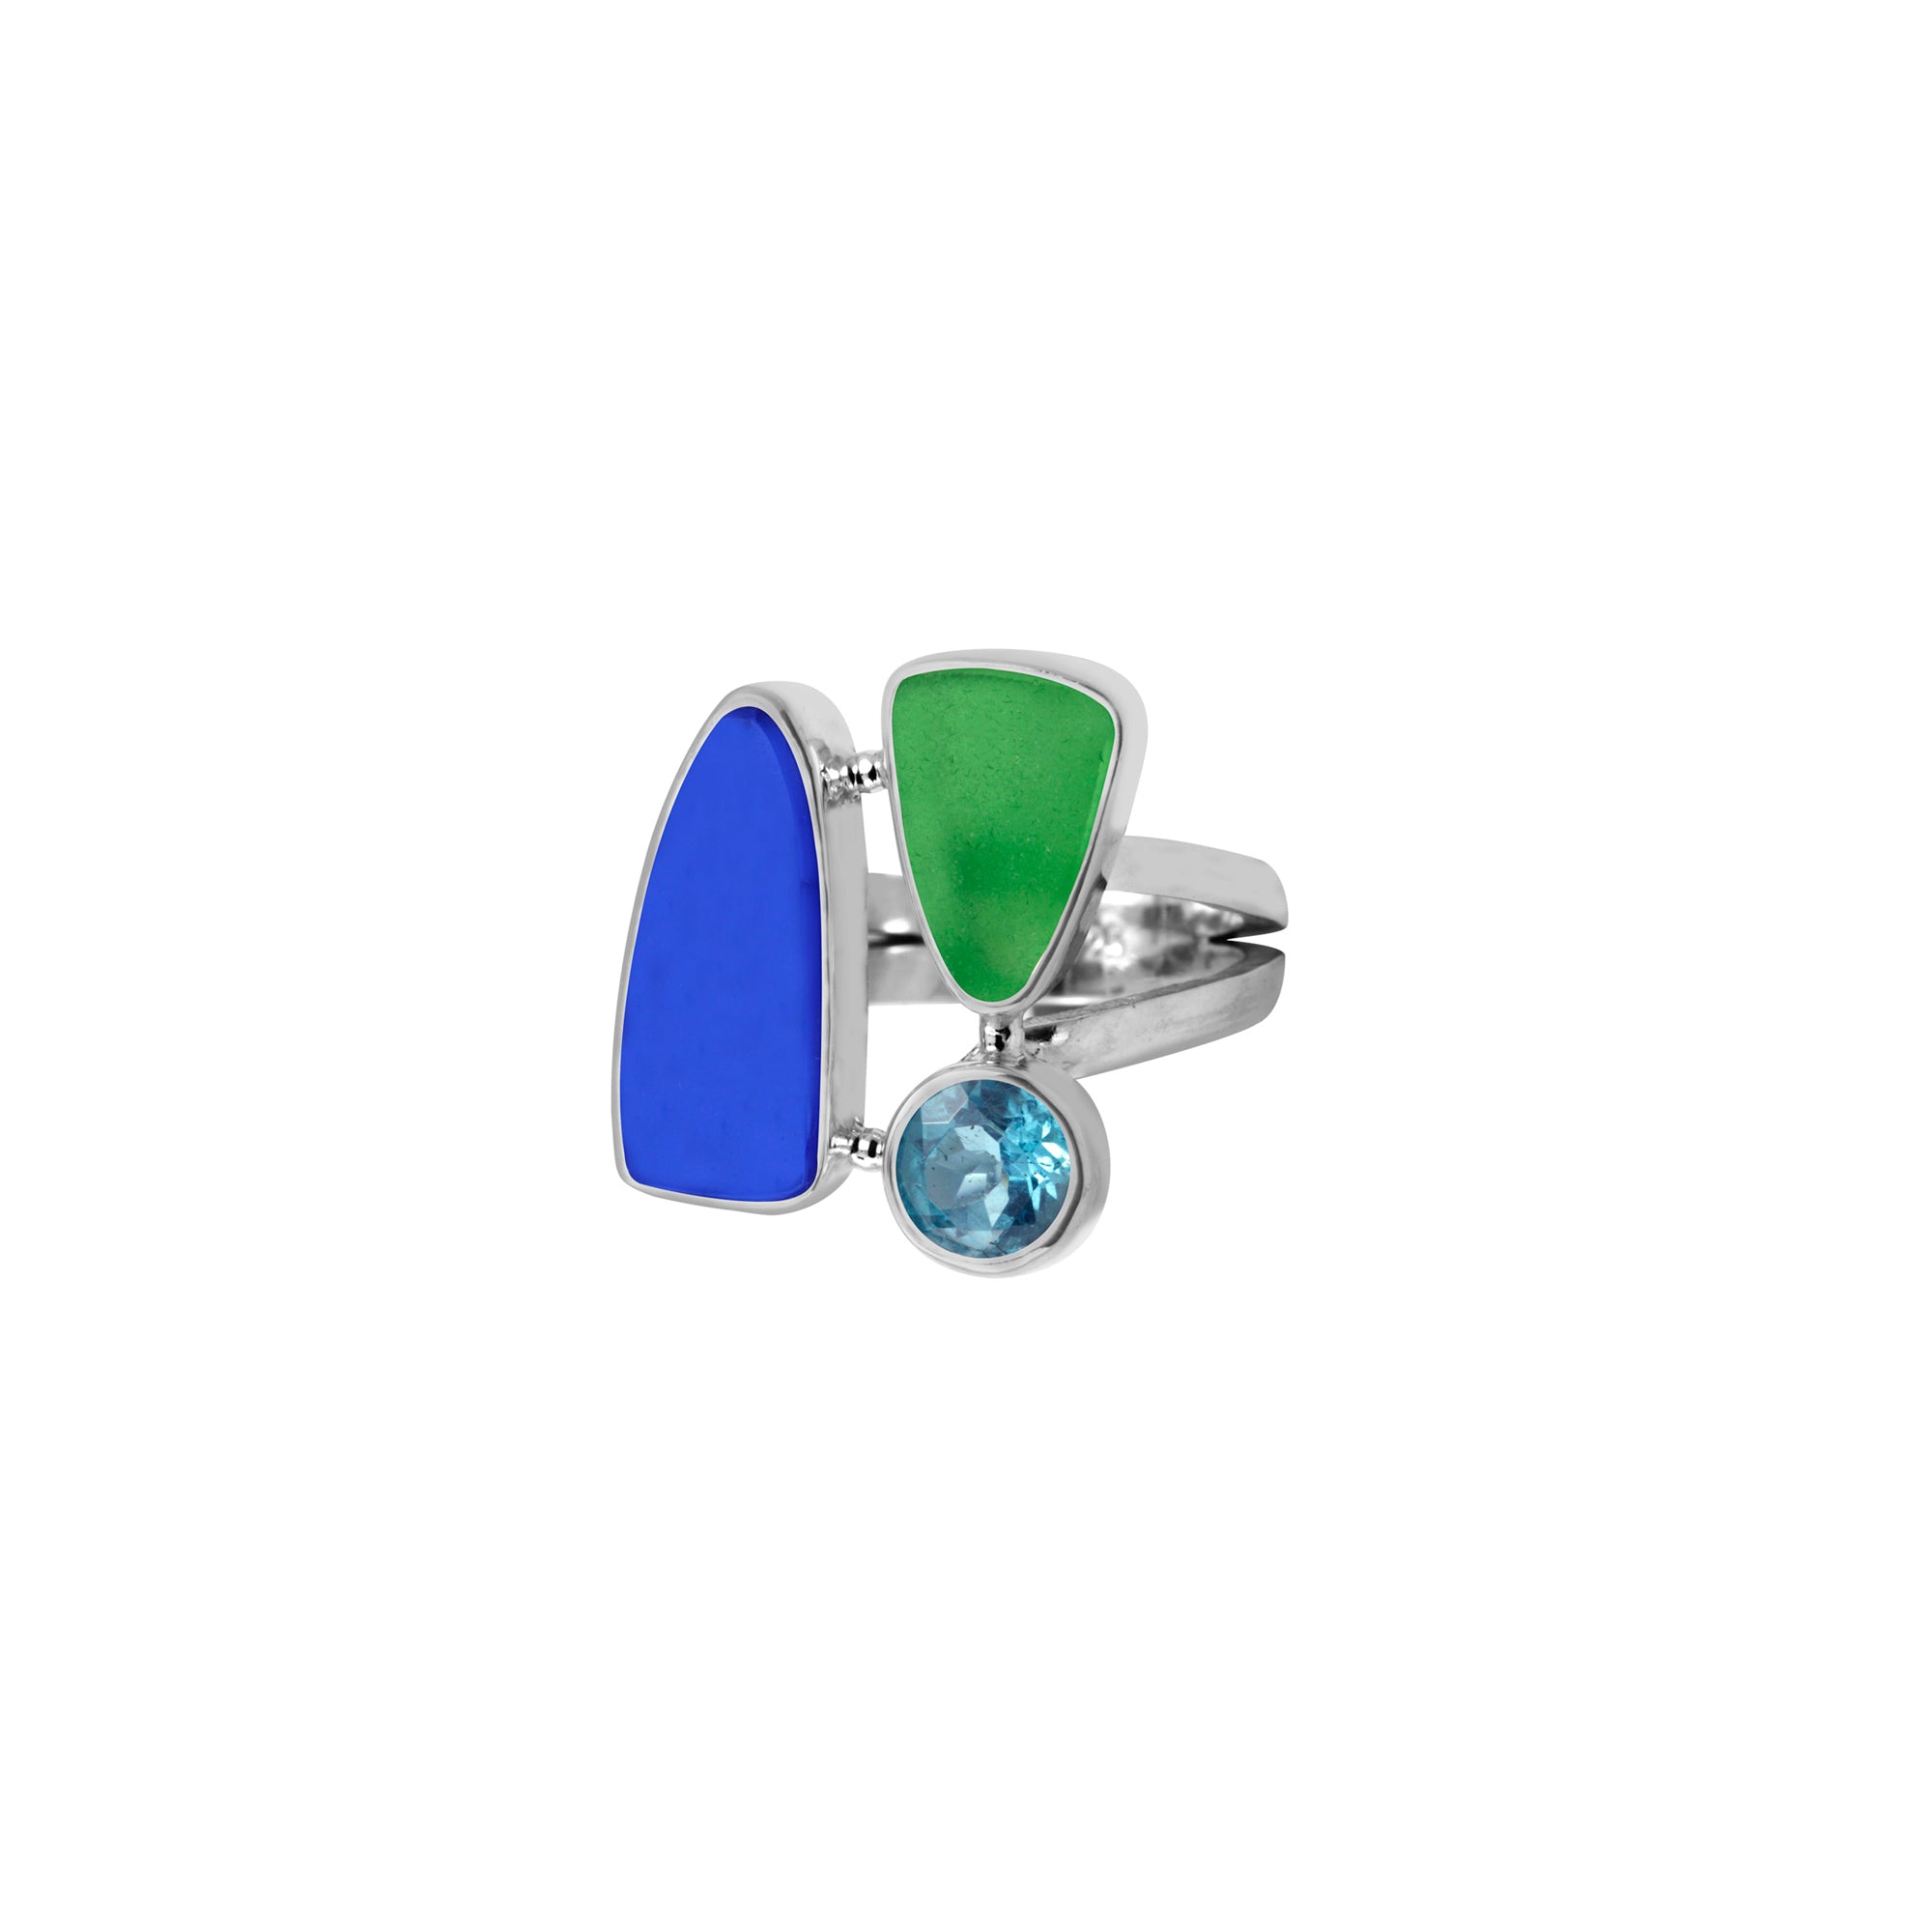 Cobalt Blue & Green Genuine Sea glass Ring with Blue Topaz